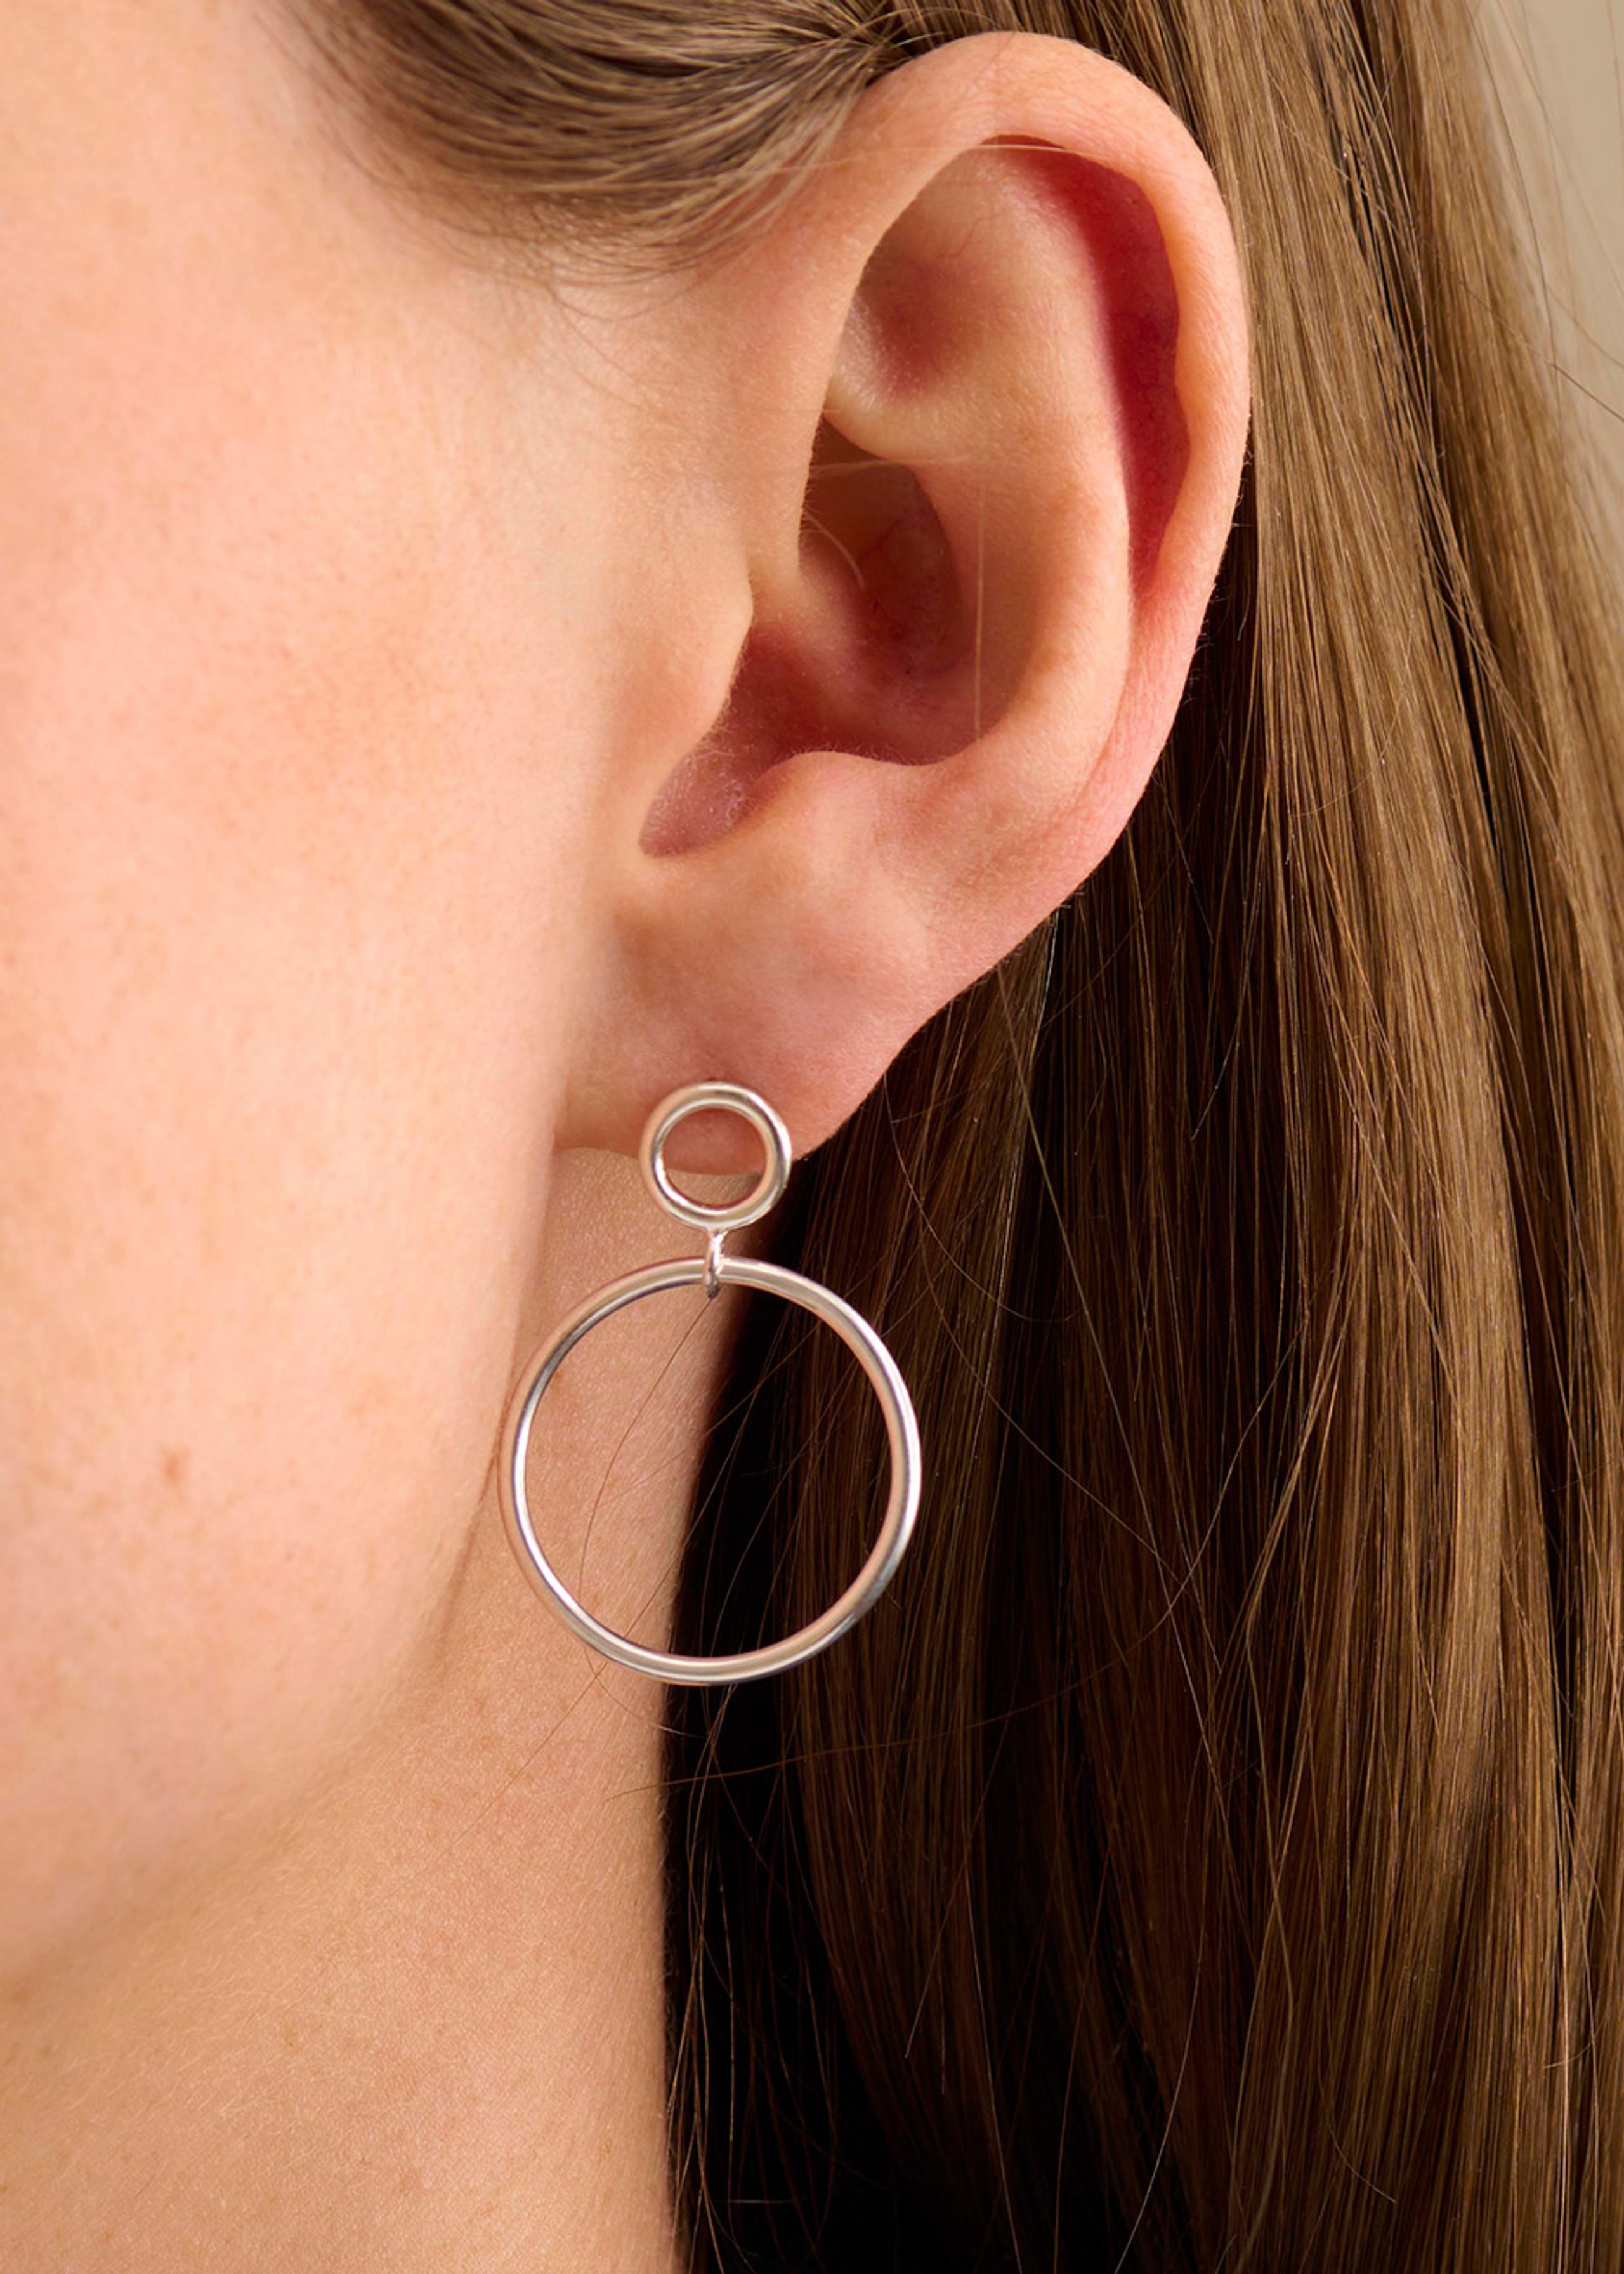 Pernille Corydon - Ohrring - Globe Earring - Gold